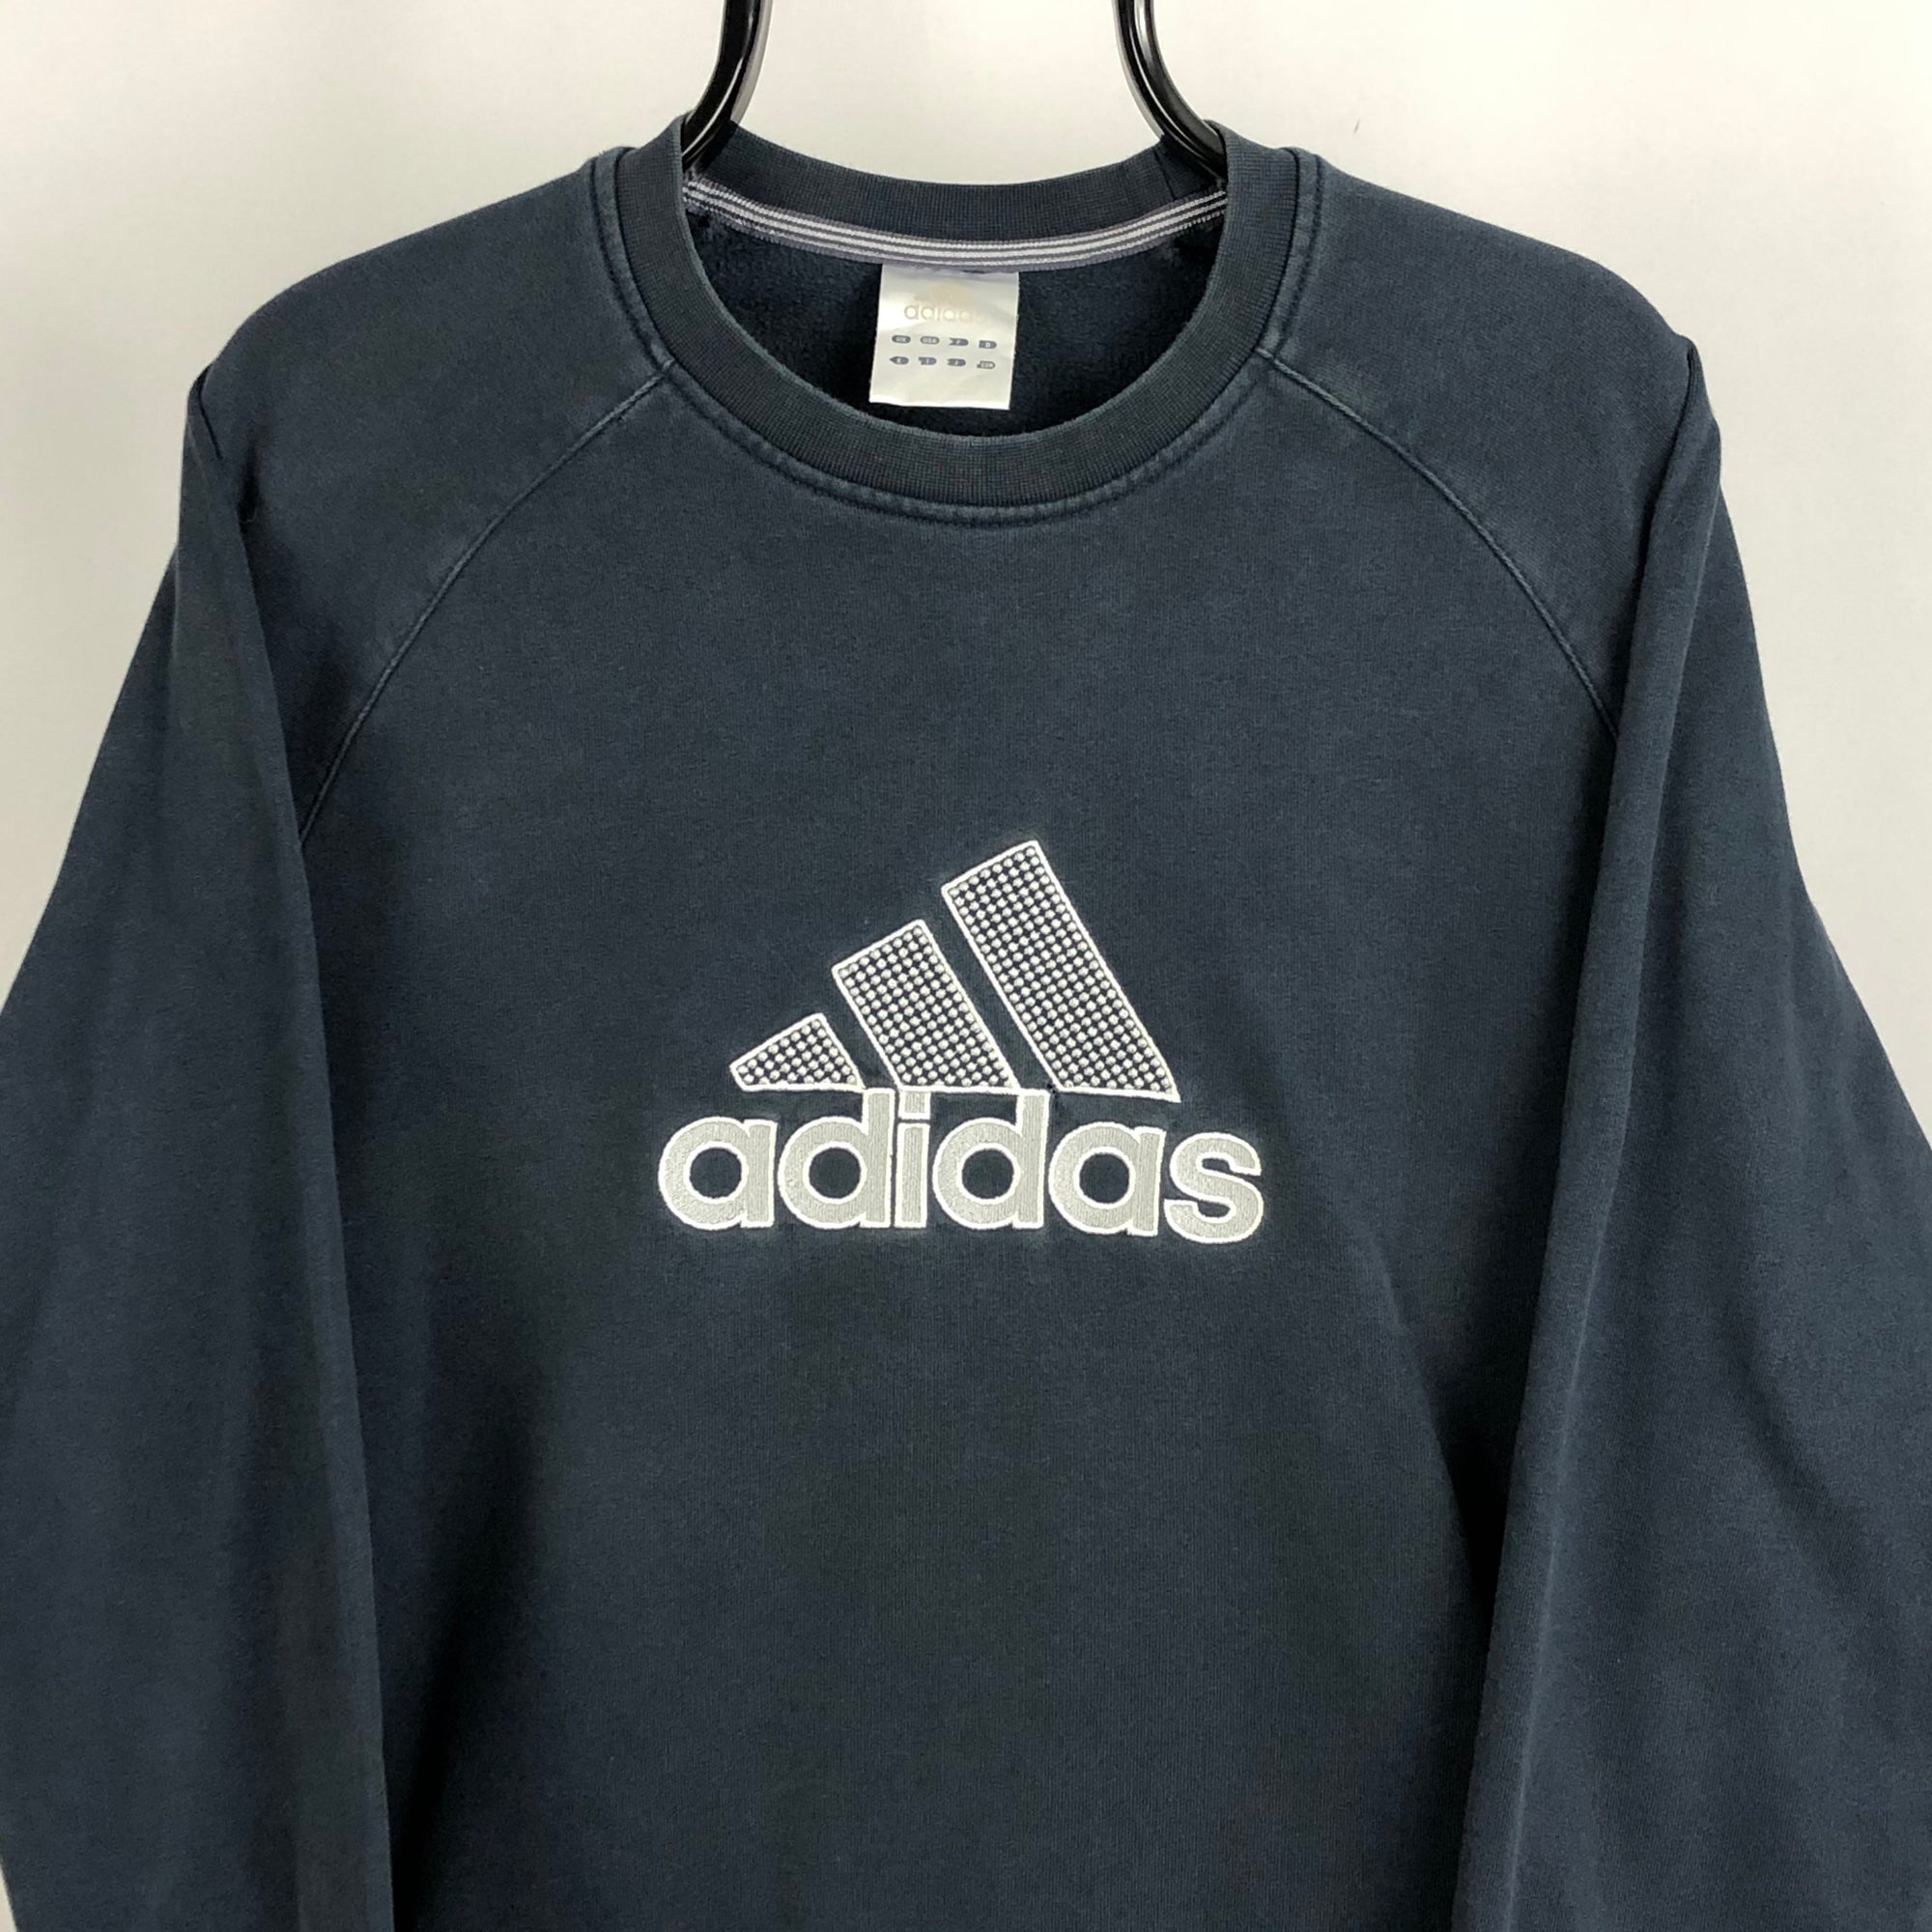 Vintage Adidas Embroidered Spellout Sweatshirt in Navy - Men's Medium/Women's Large